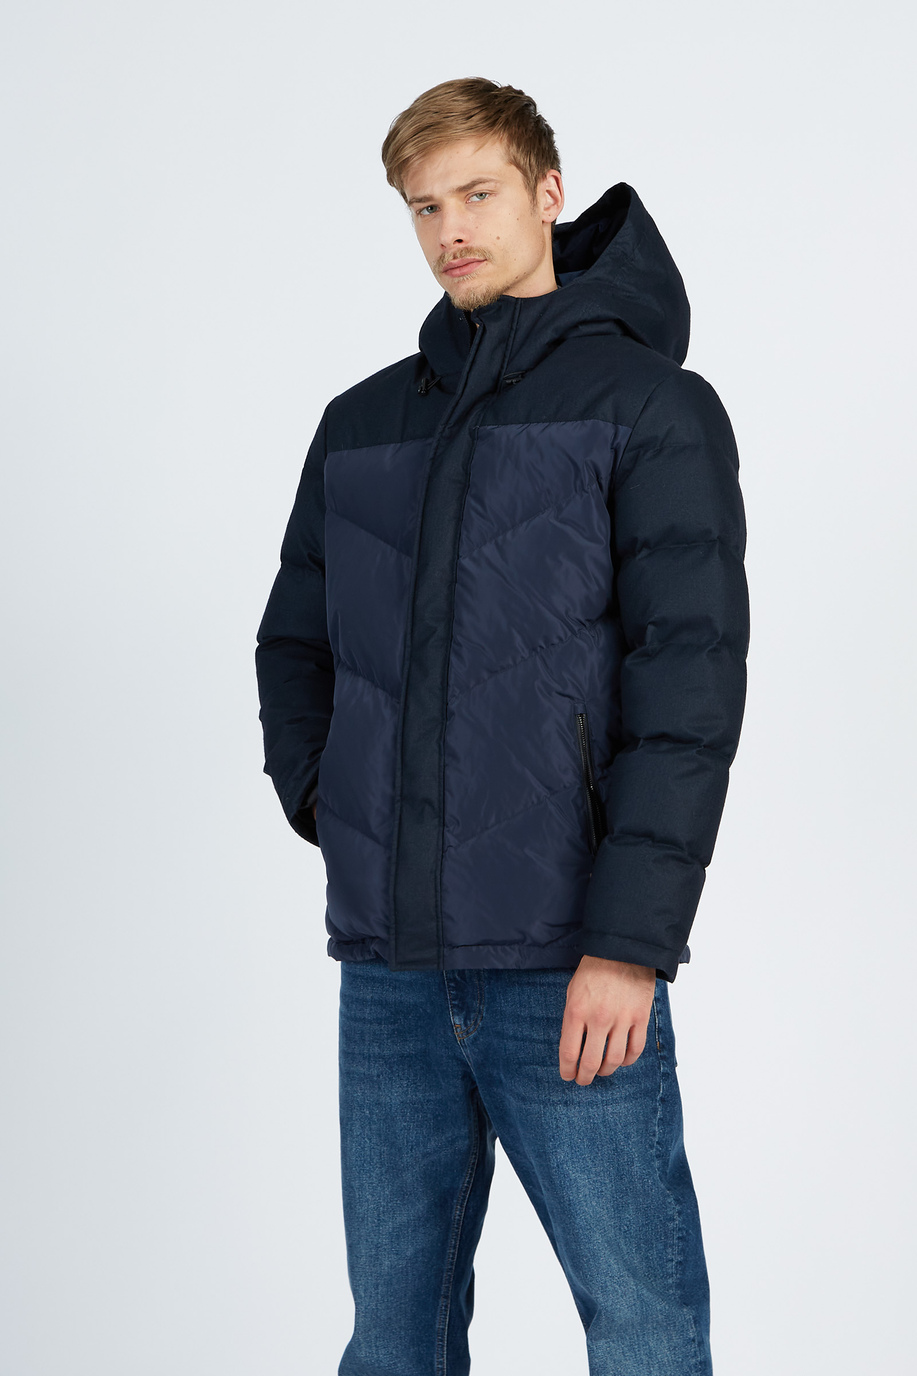 Men’s padded down jacket with hood regular fit model - Rainproof & Windproof | La Martina - Official Online Shop